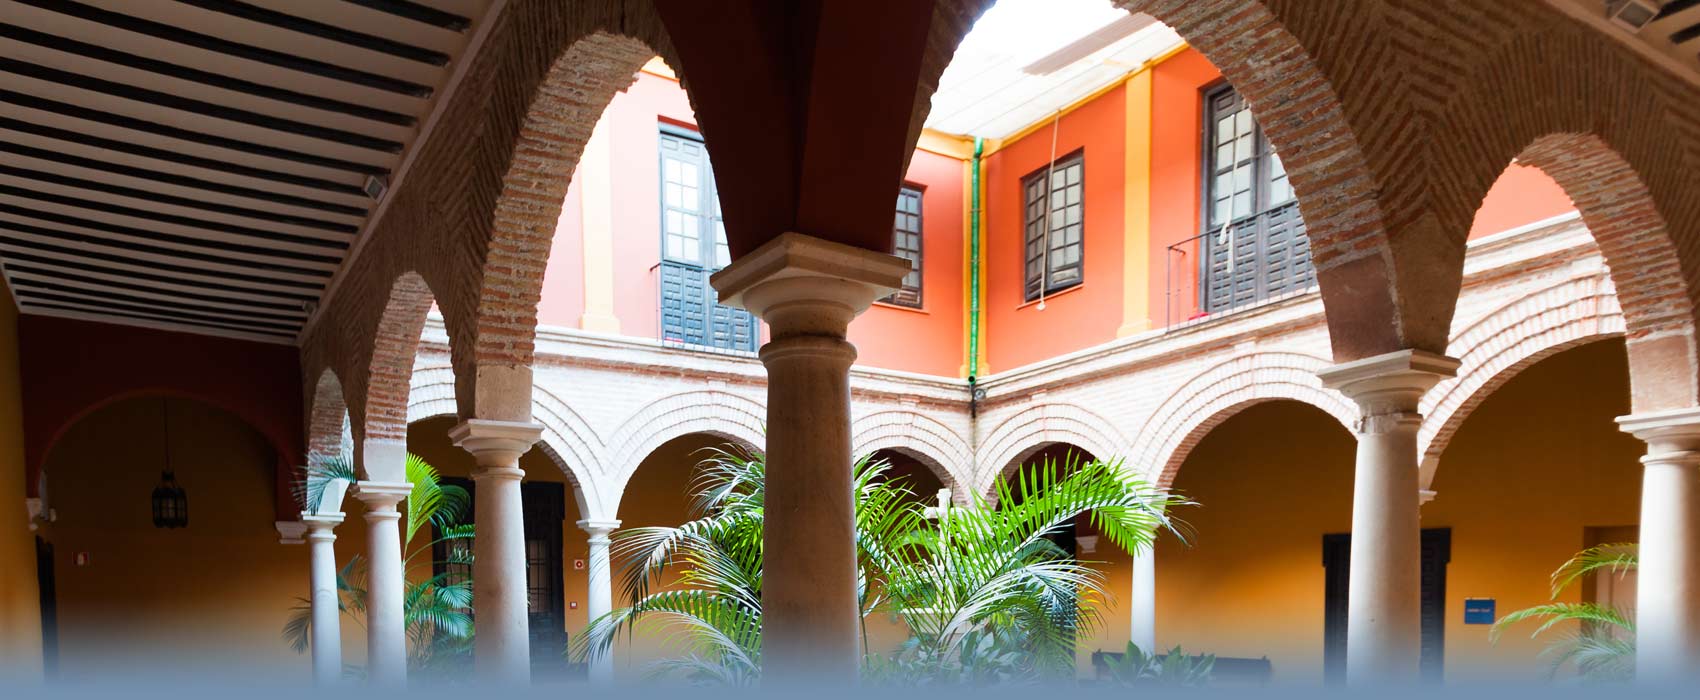 Das Kulturmuseum von Malaga